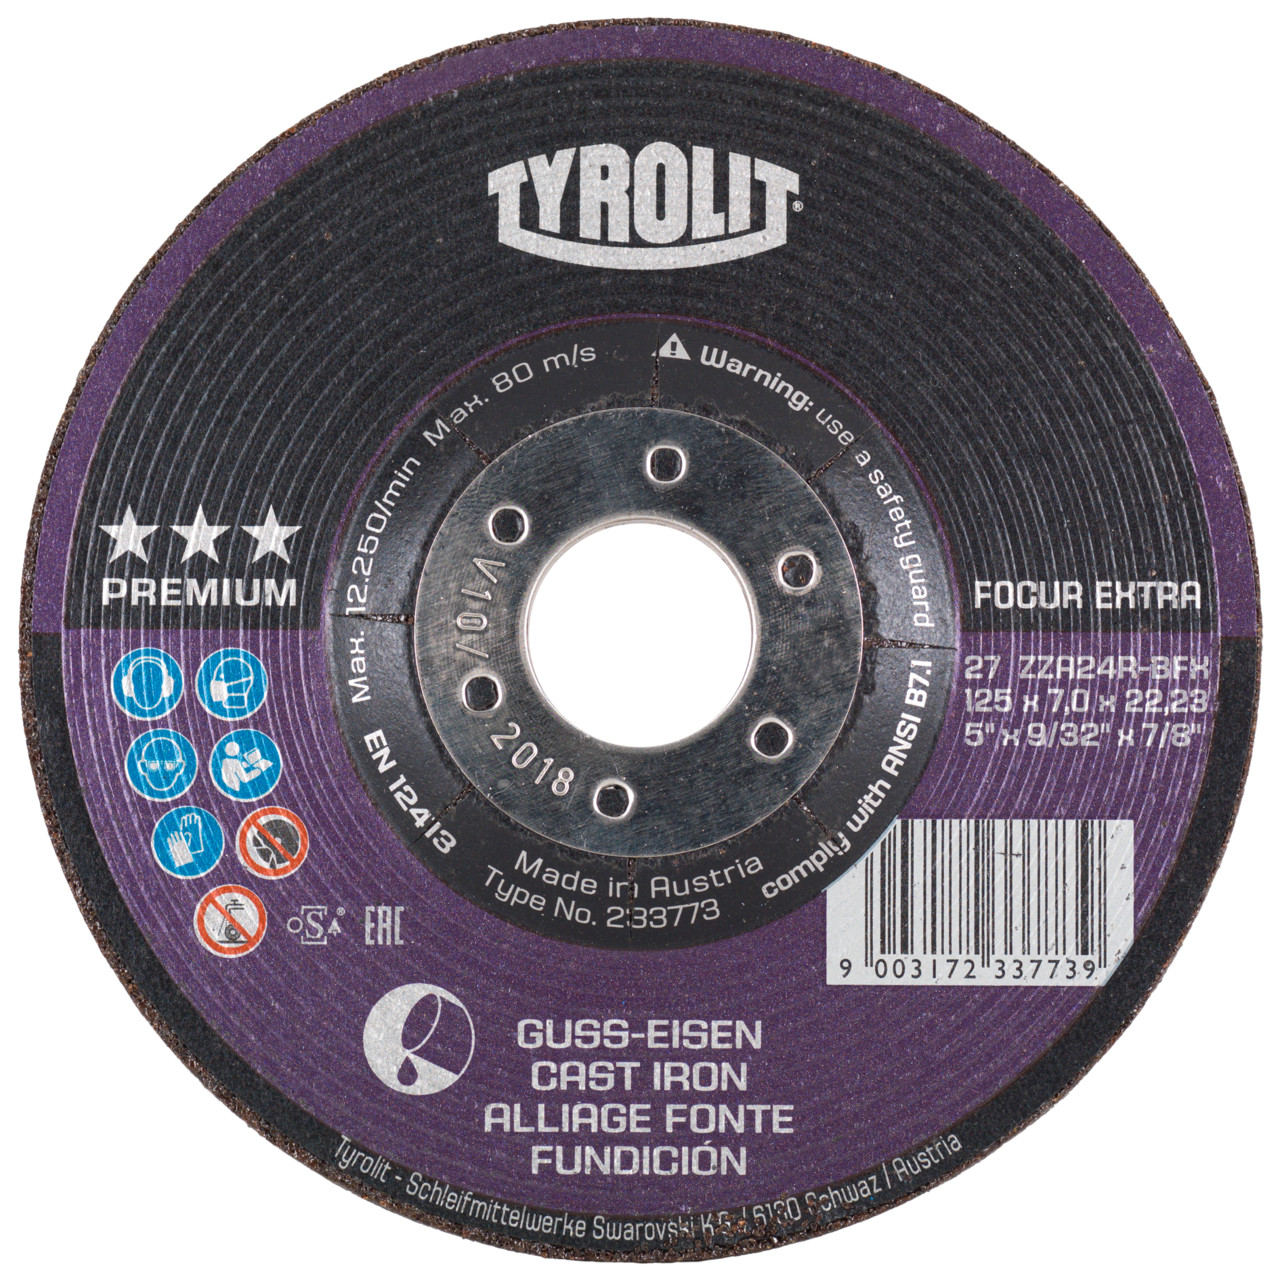 TYROLIT disco de desbaste DxUxH 125x7x22,23 FOCUR Extra para fundición gris, forma: 27 - versión offset, Art. 233756